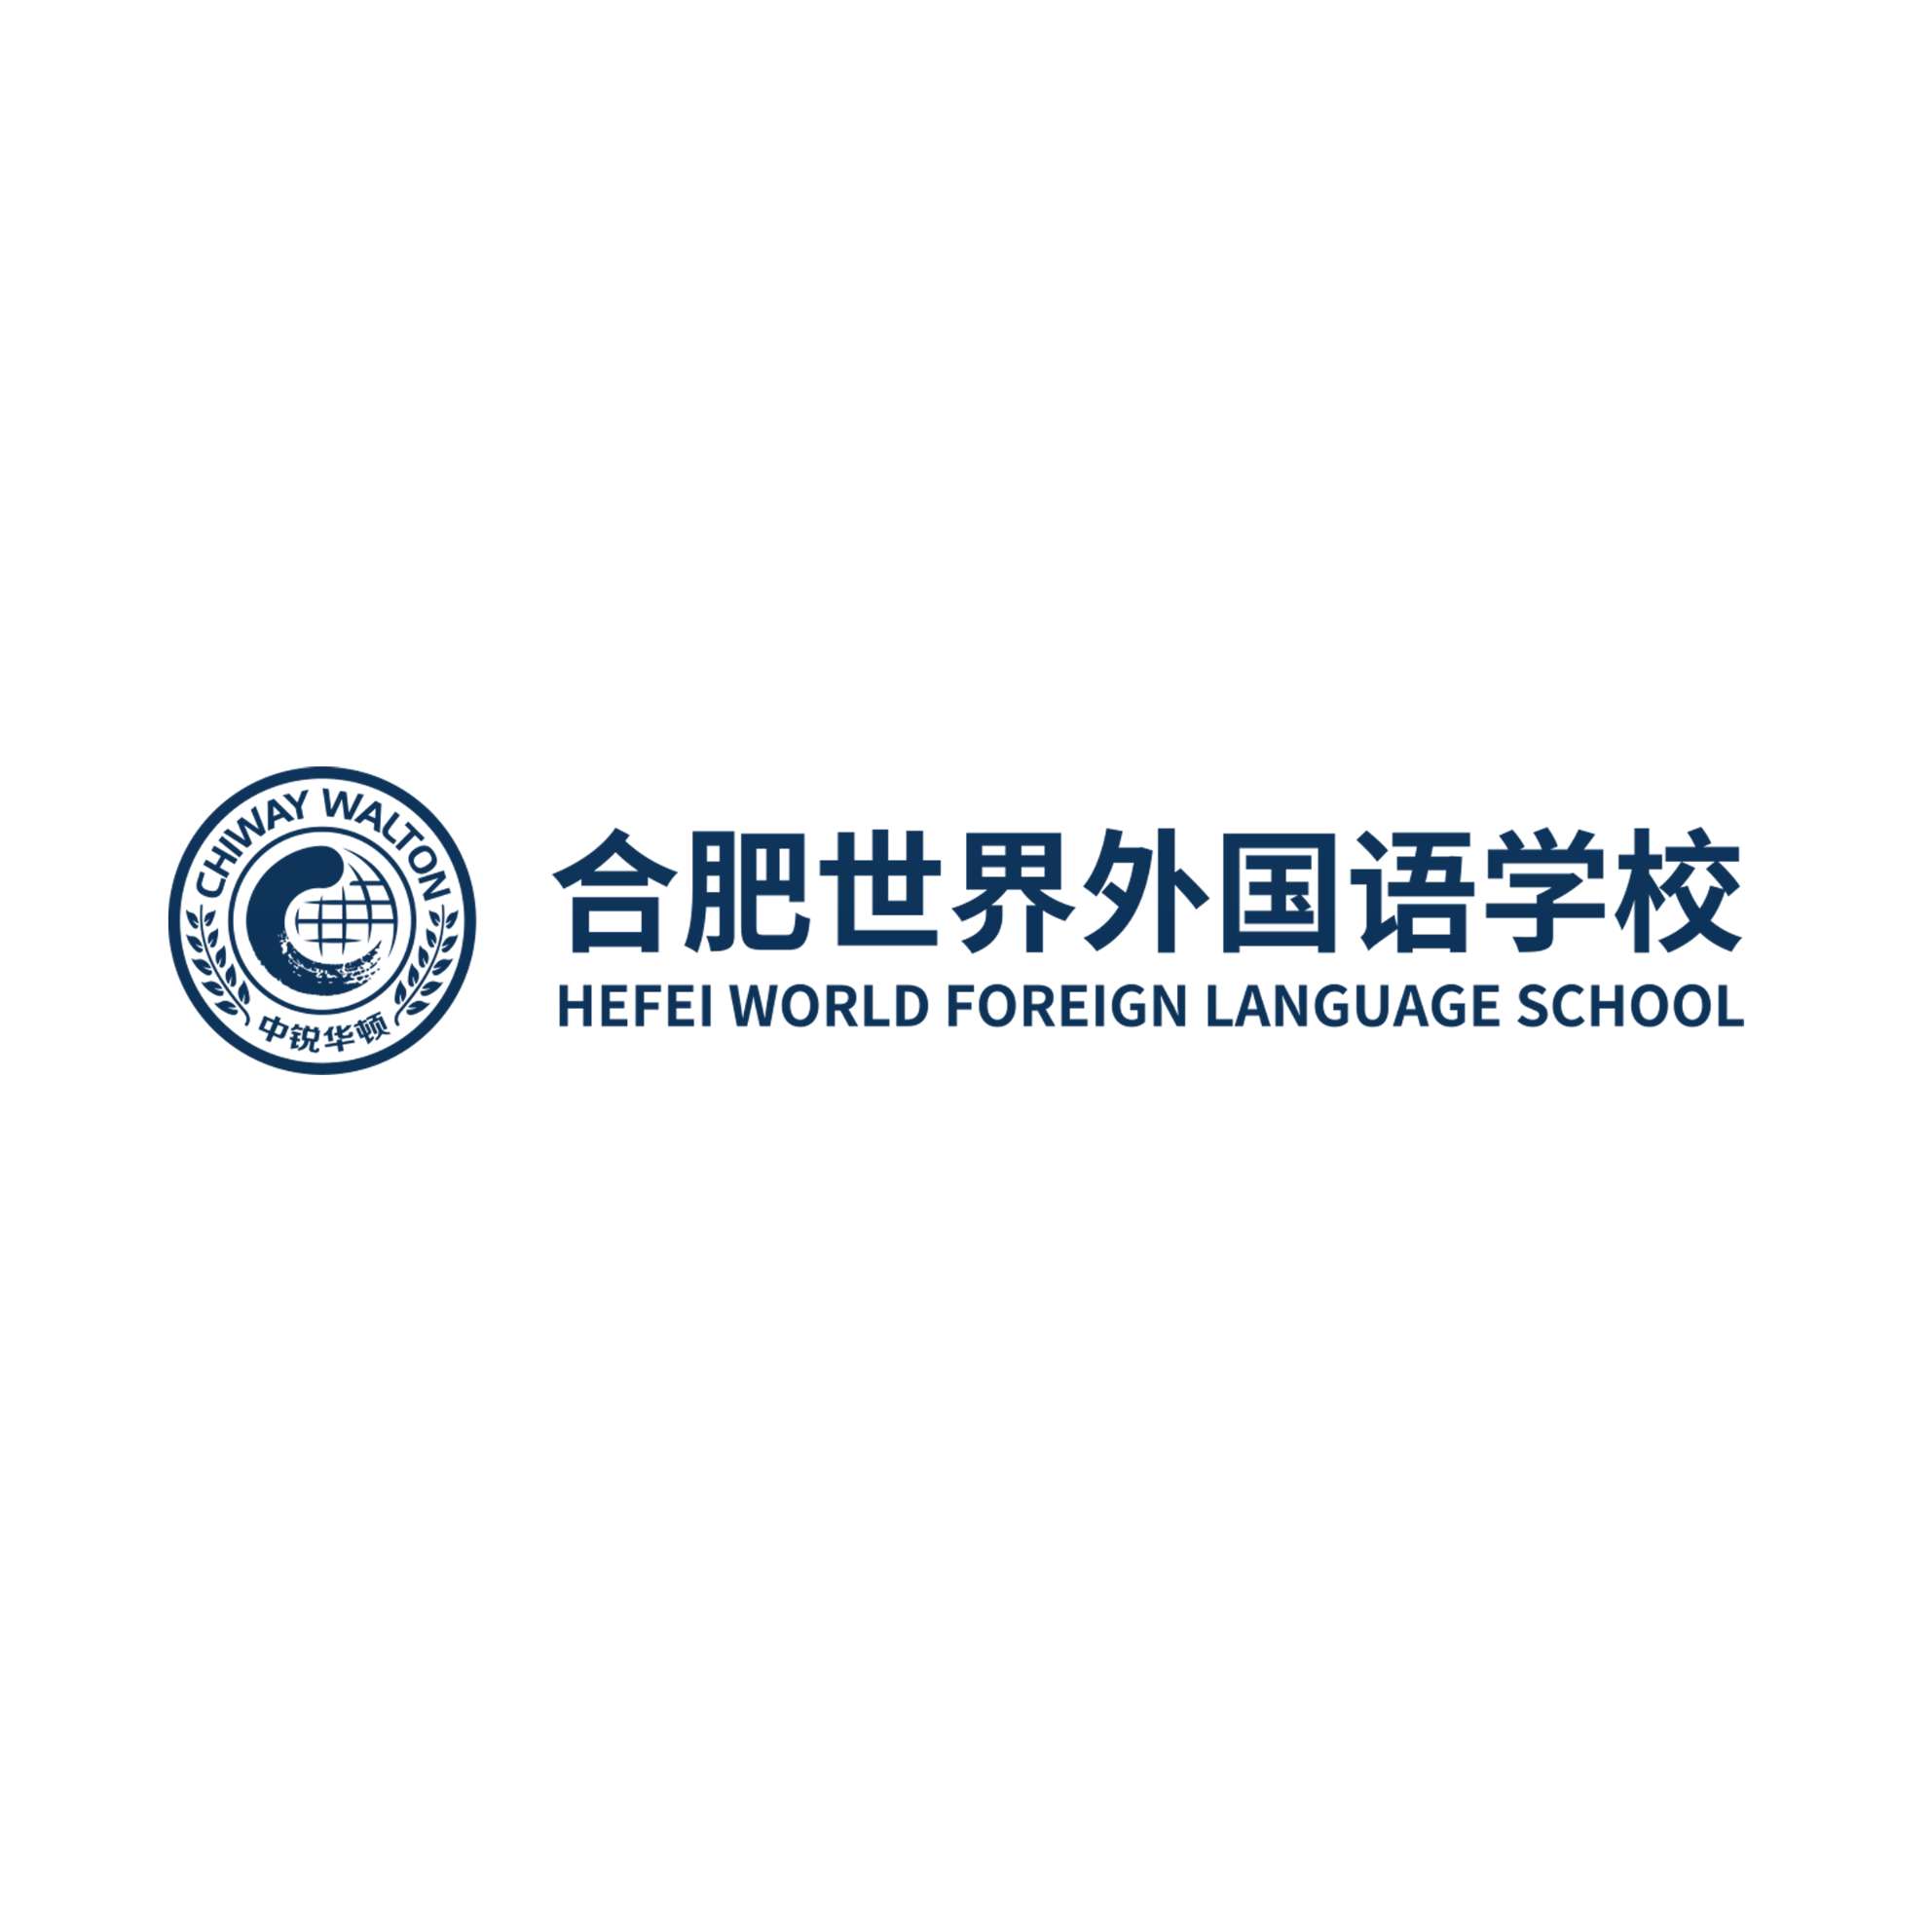 Hefei world foreign language school logo